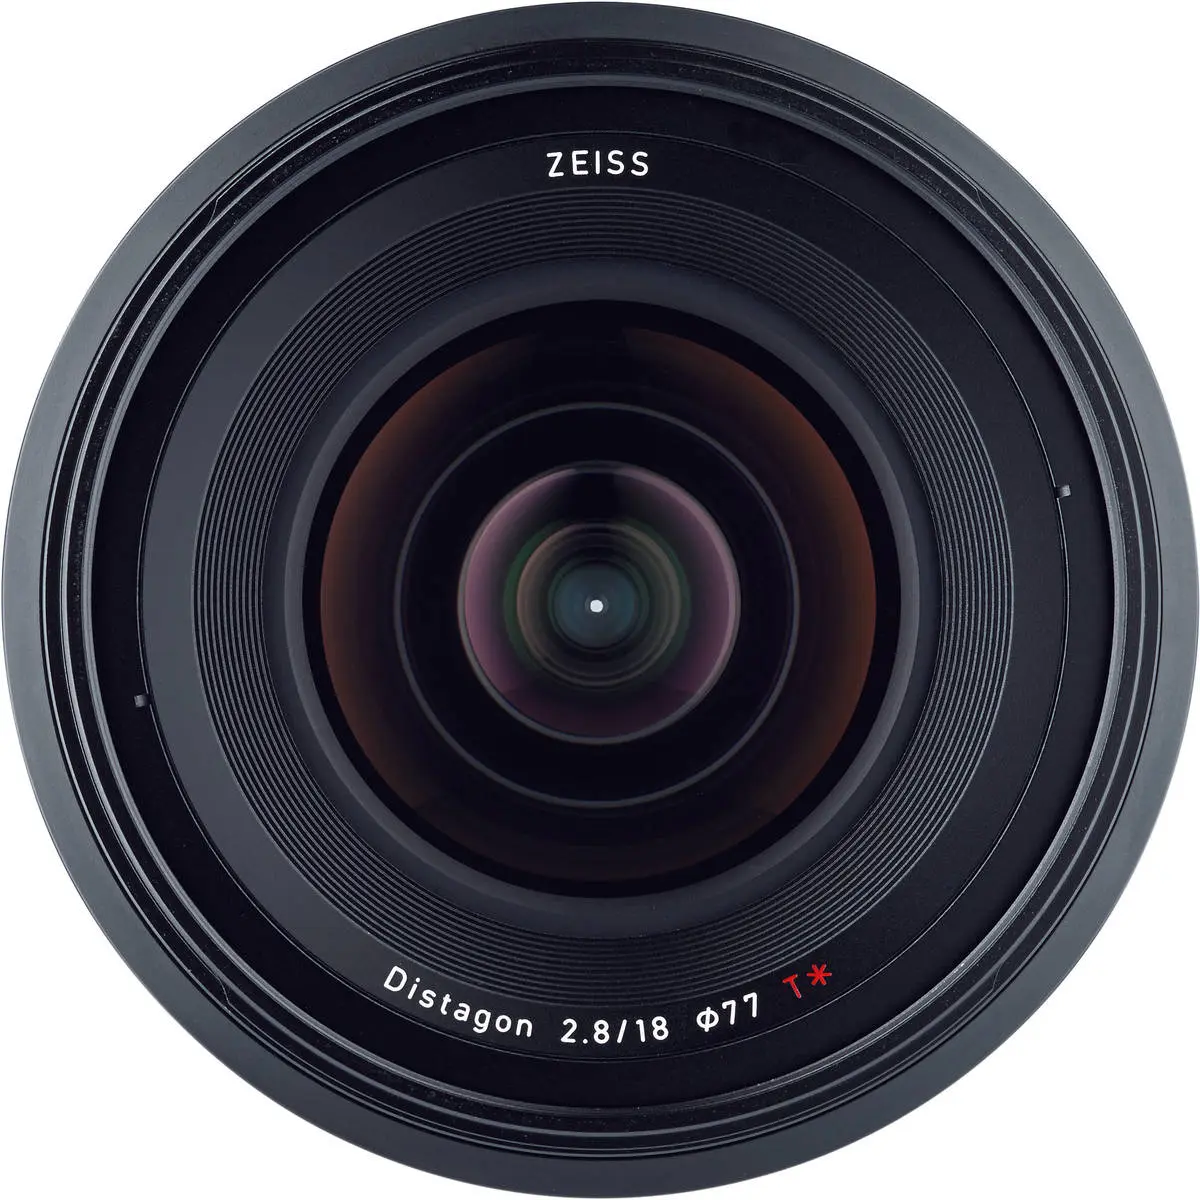 4. Carl Zeiss Milvus ZE 2.8/18mm (Canon) Lens